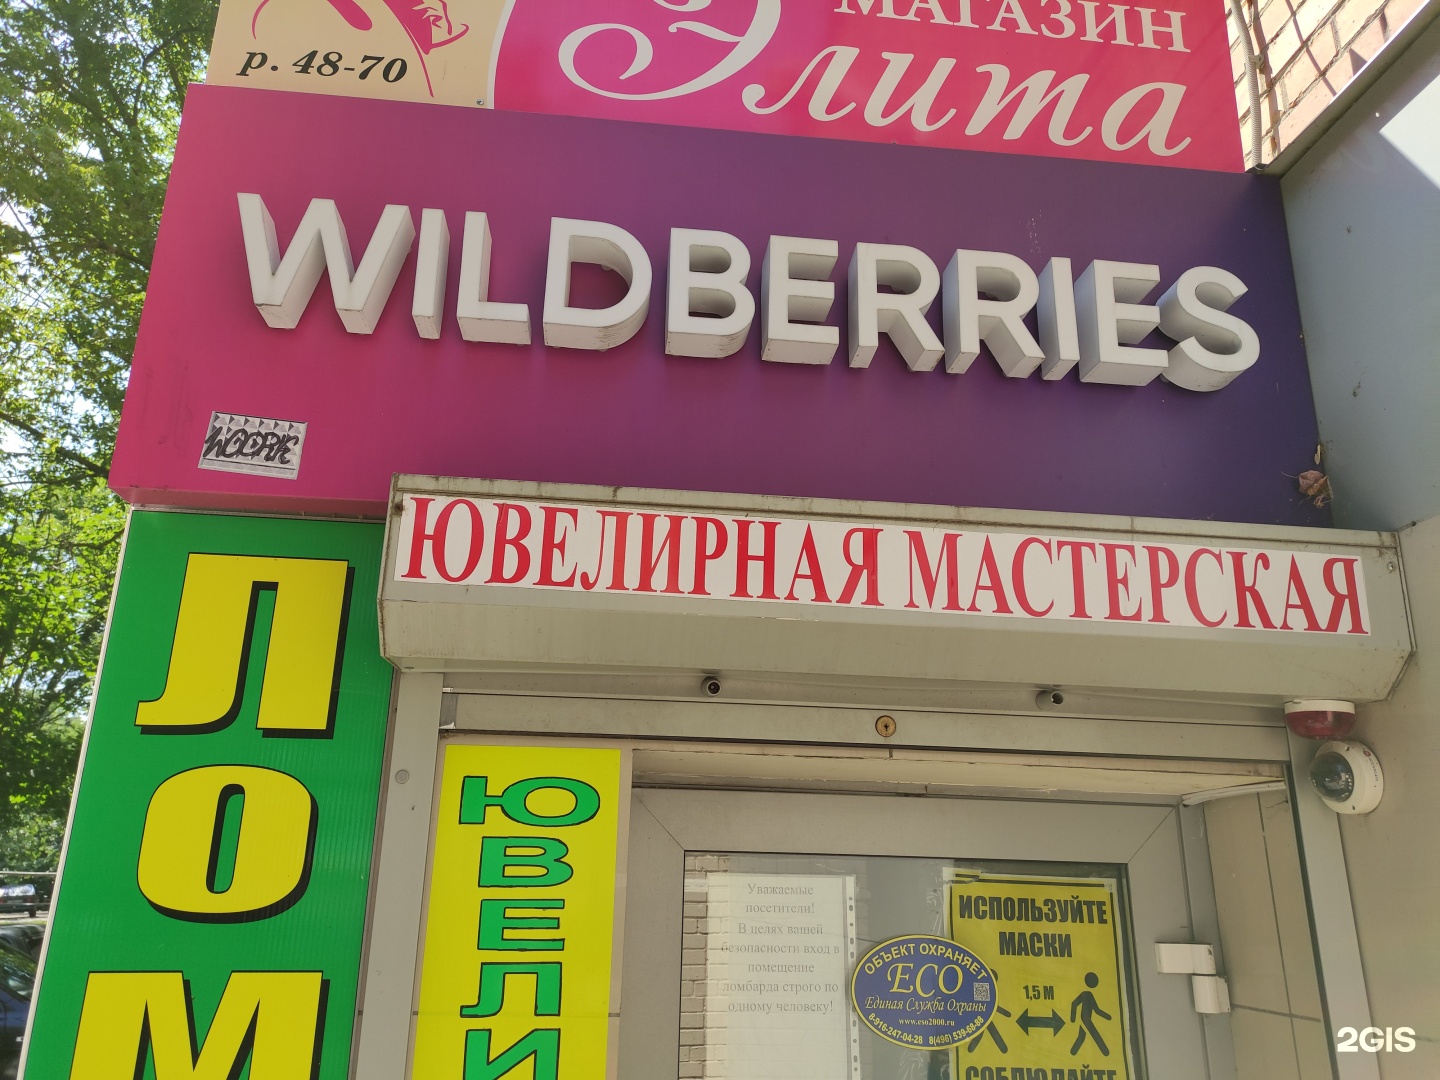 Wildberries Интернет Магазин Пушкино